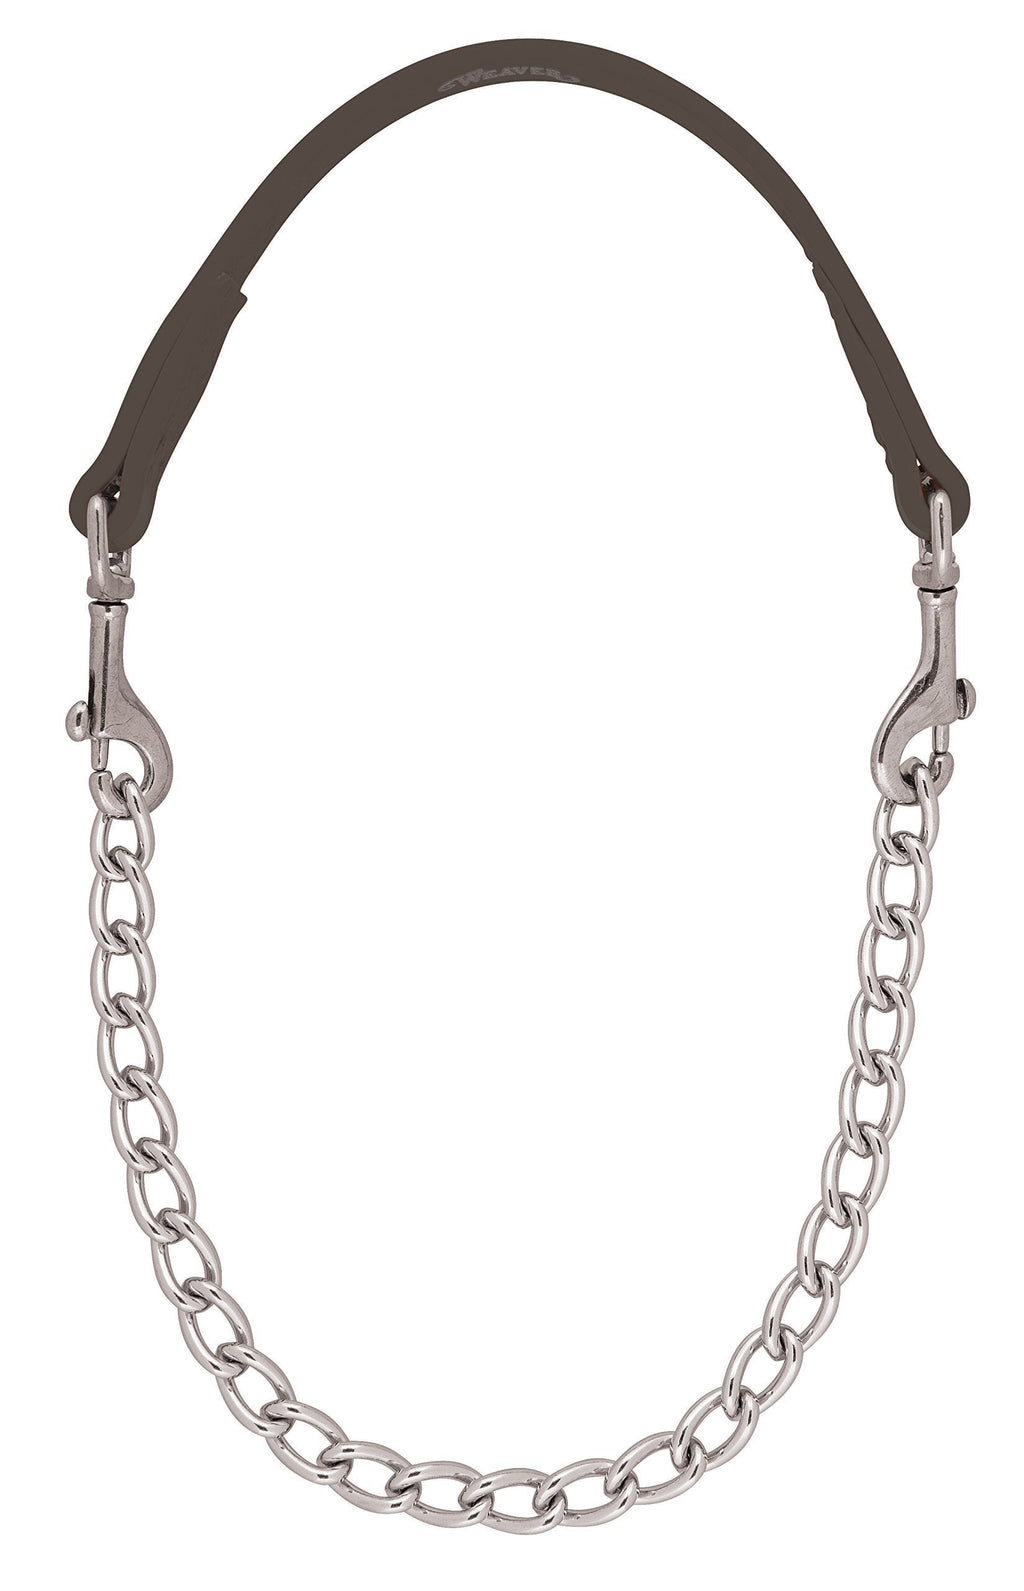 [Australia] - Weaver Leather Brahma Webb Goat Collar, Nickel Plated Chain Brown Regular 